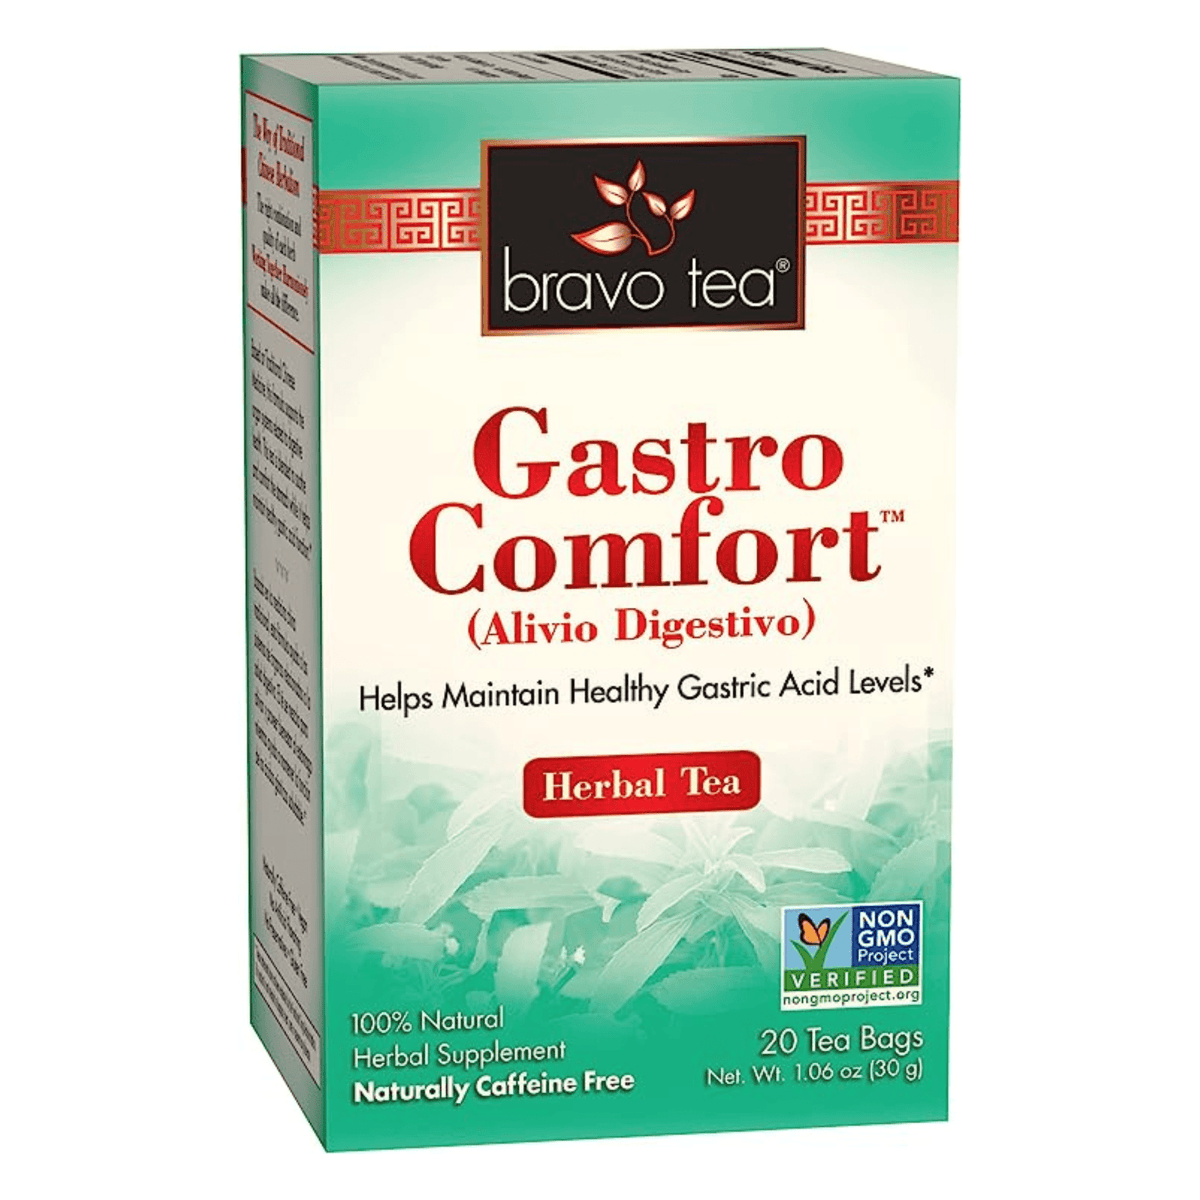 Primary Image of Gastro Comfort Tea Bags